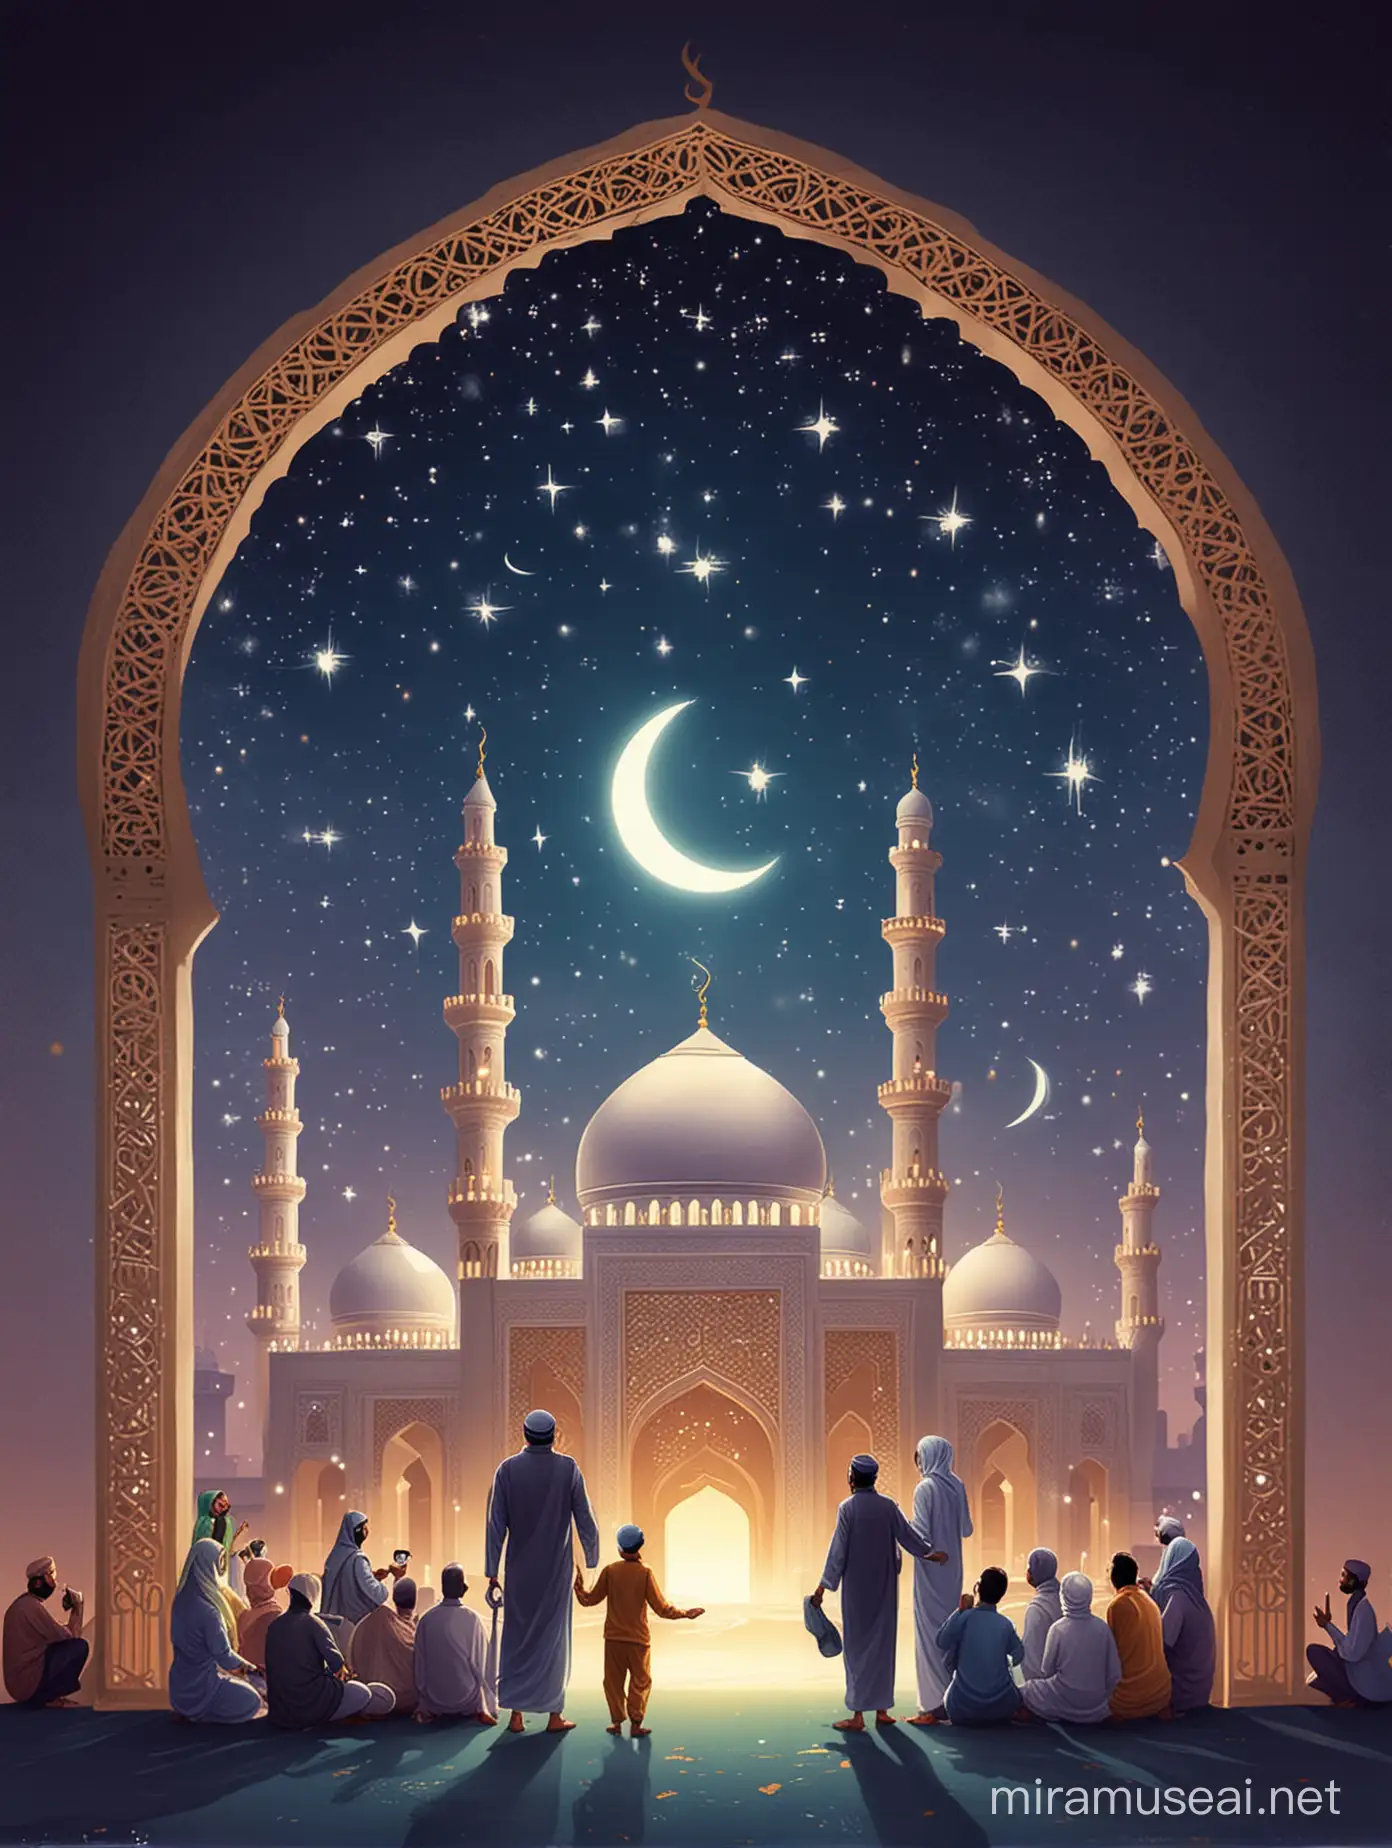 illustration to celebrate eid mubarak

